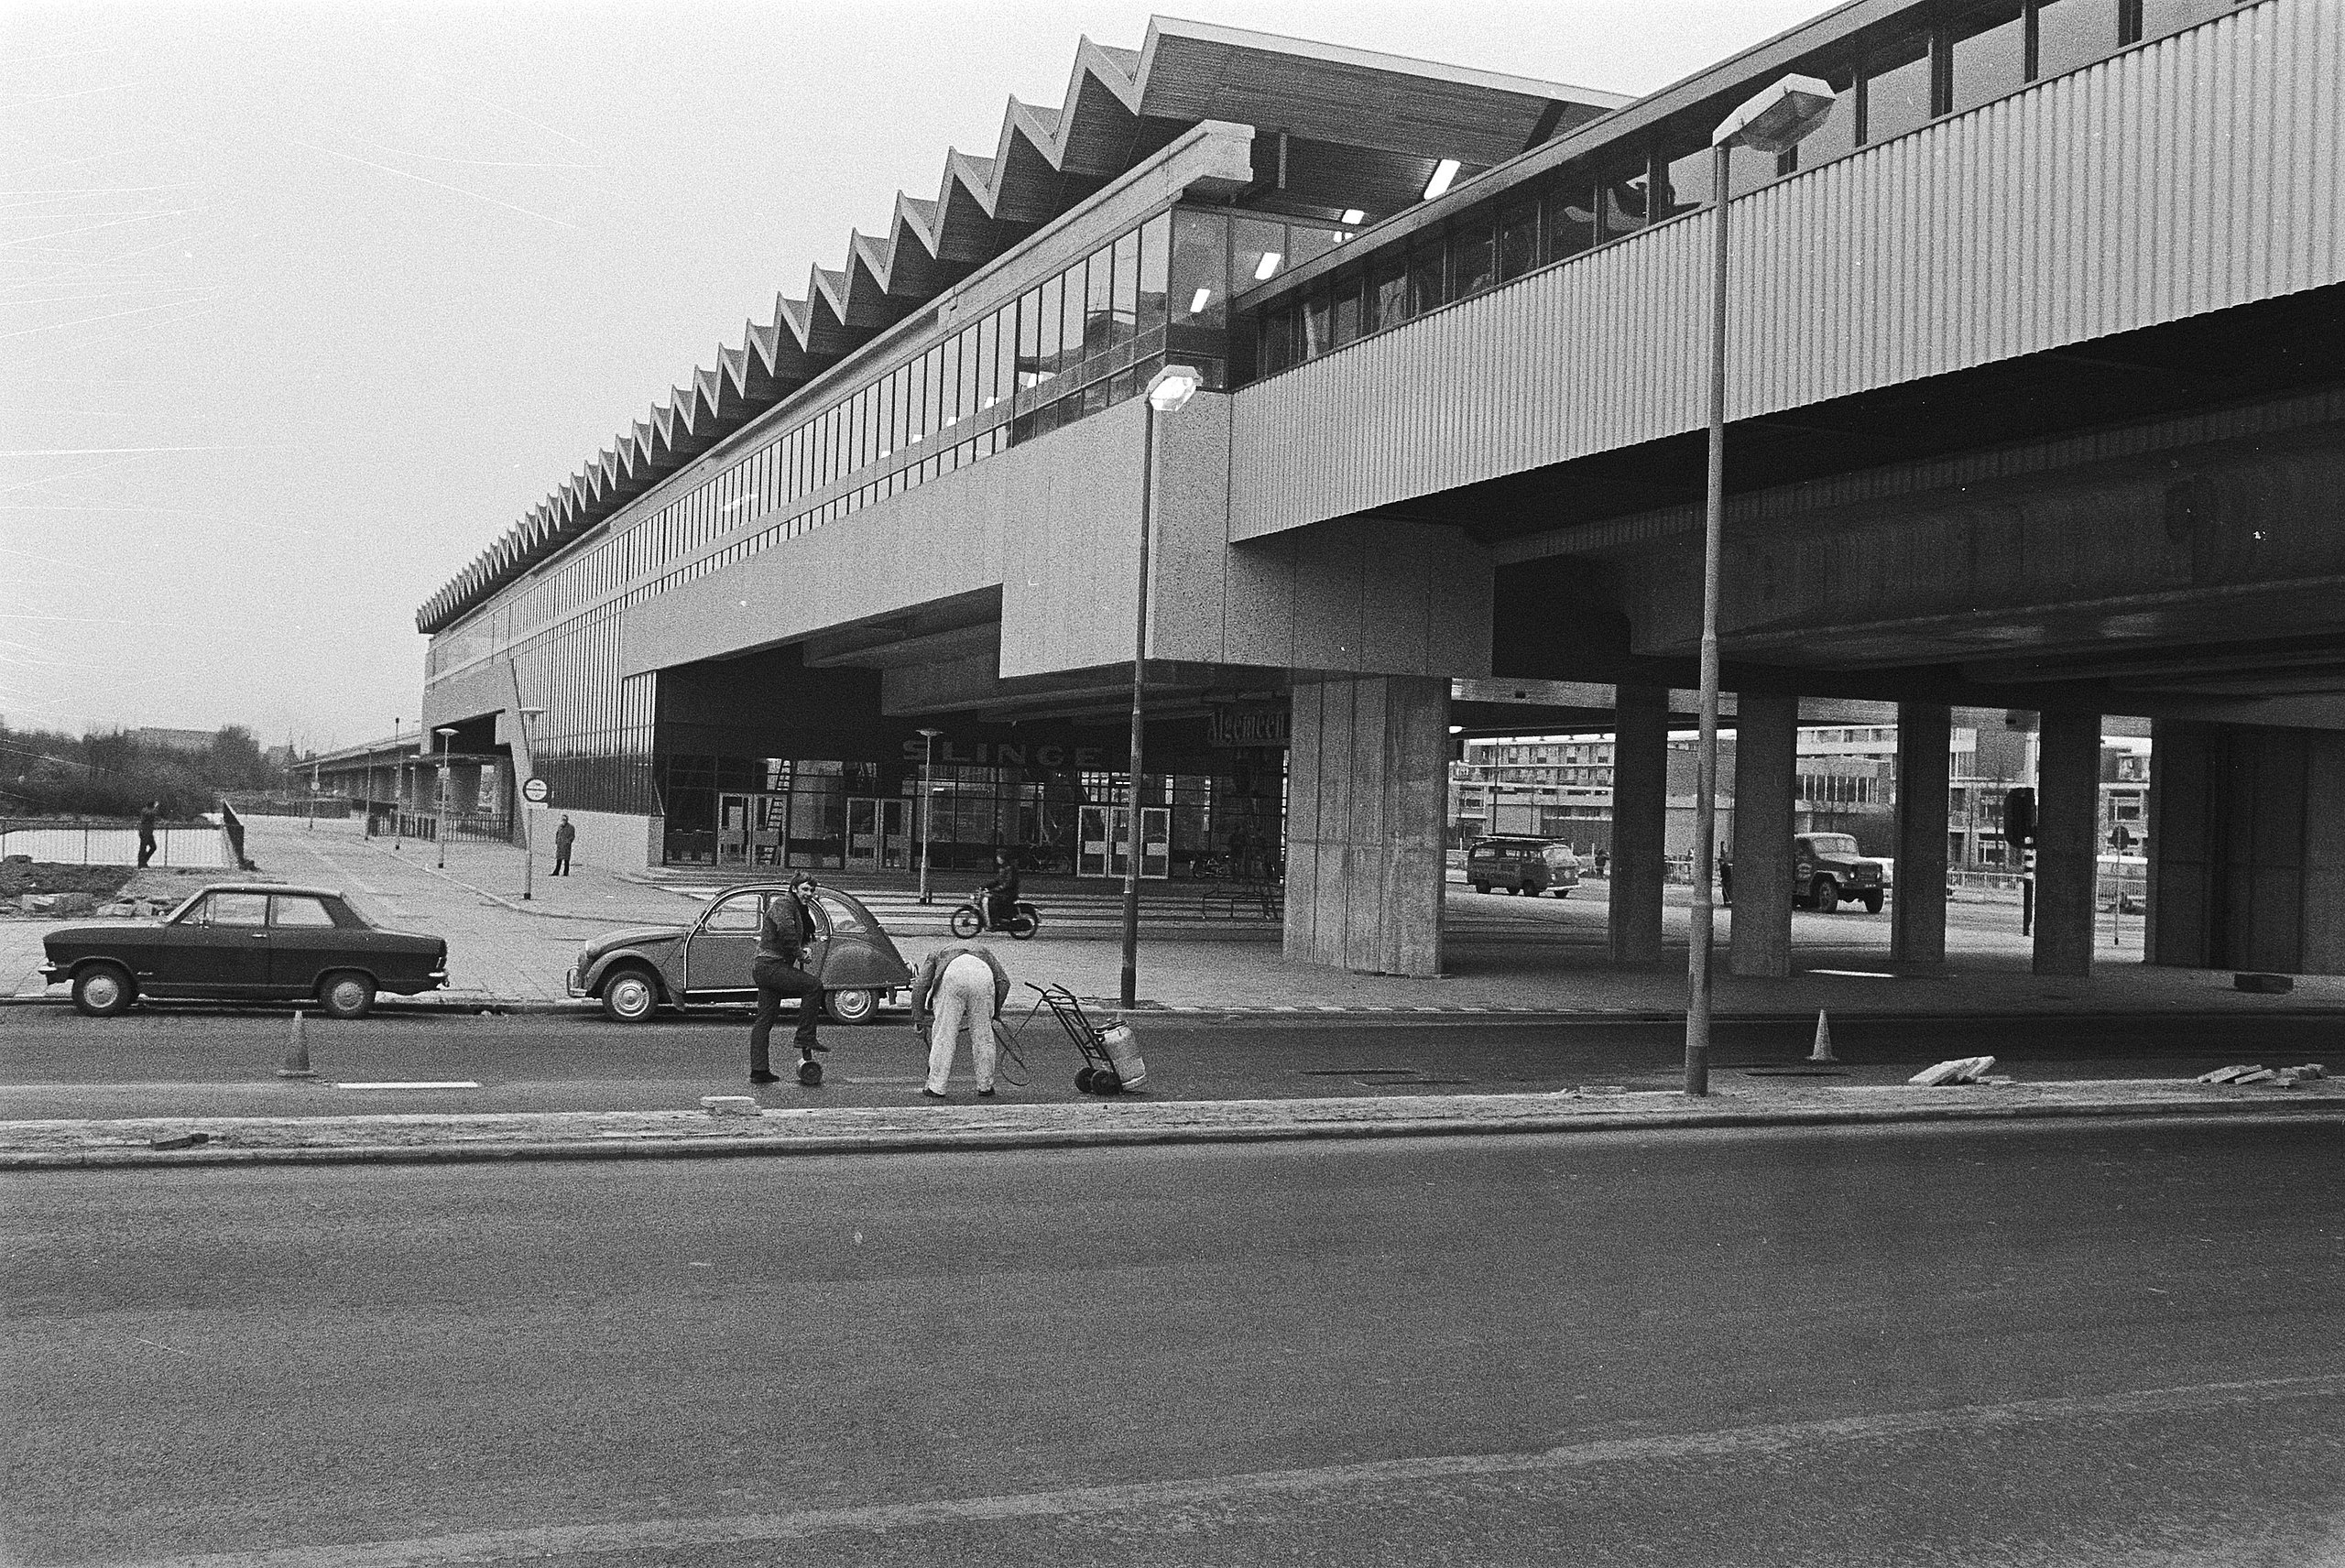 Ver weg Panorama Brawl File:Nieuwe metrostation Slinge wordt 25 november geopend, Rotterdam-Zuid  exterieur, Bestanddeelnr 924-0387.jpg - Wikimedia Commons